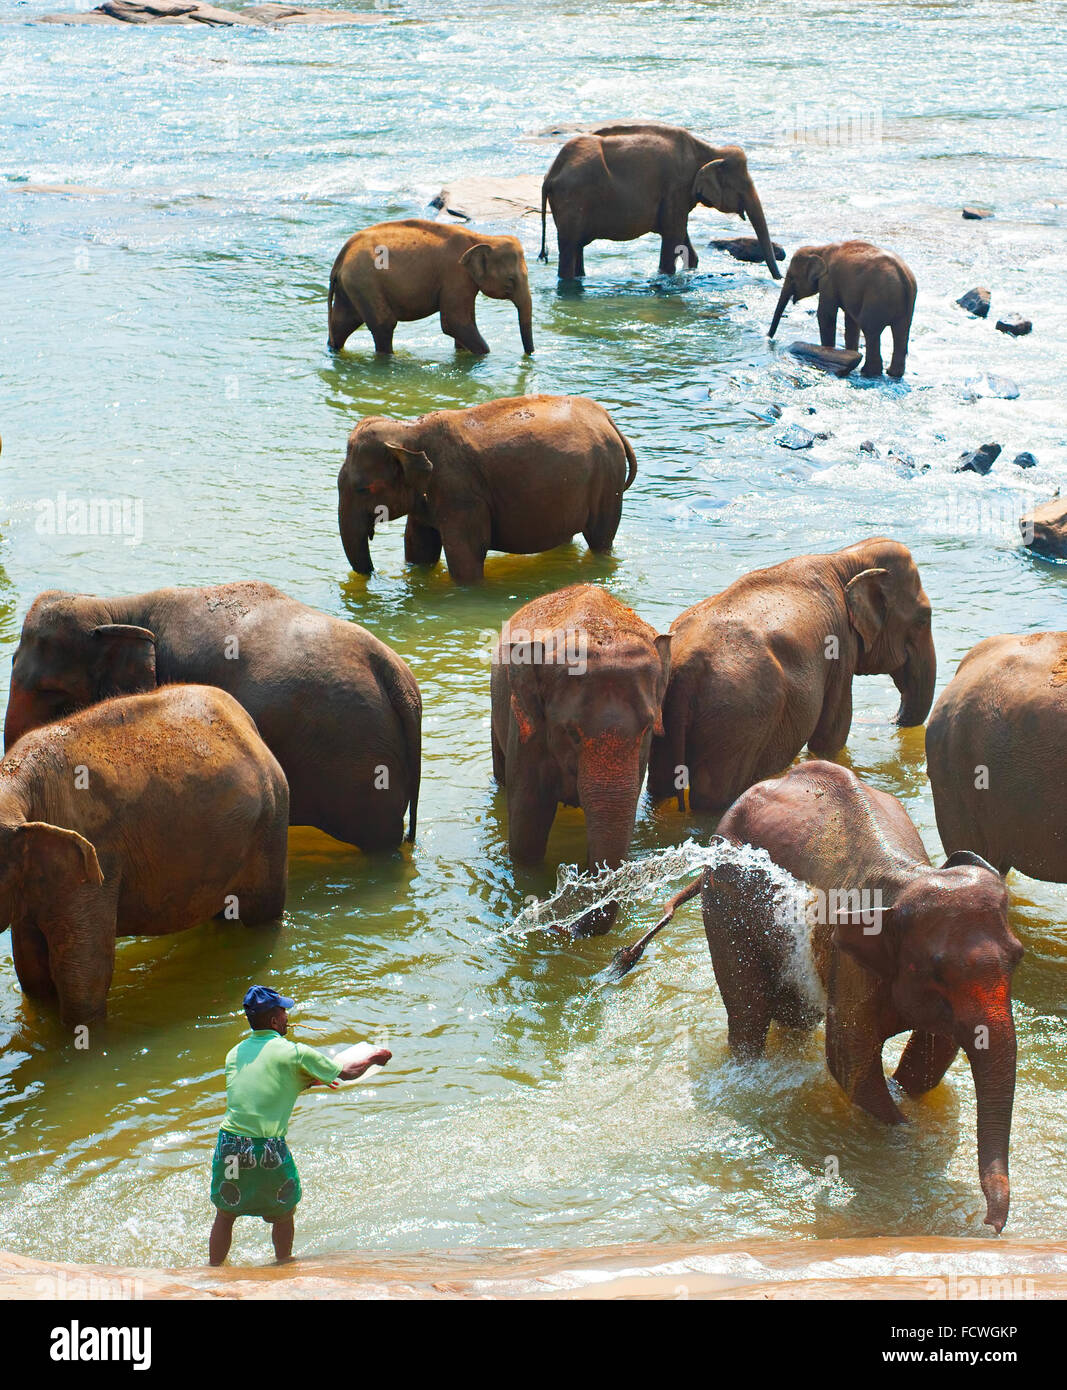 Elephants from the Pinnawela Elephant Orphanage in Pinnawela, Sri Lanka. Stock Photo